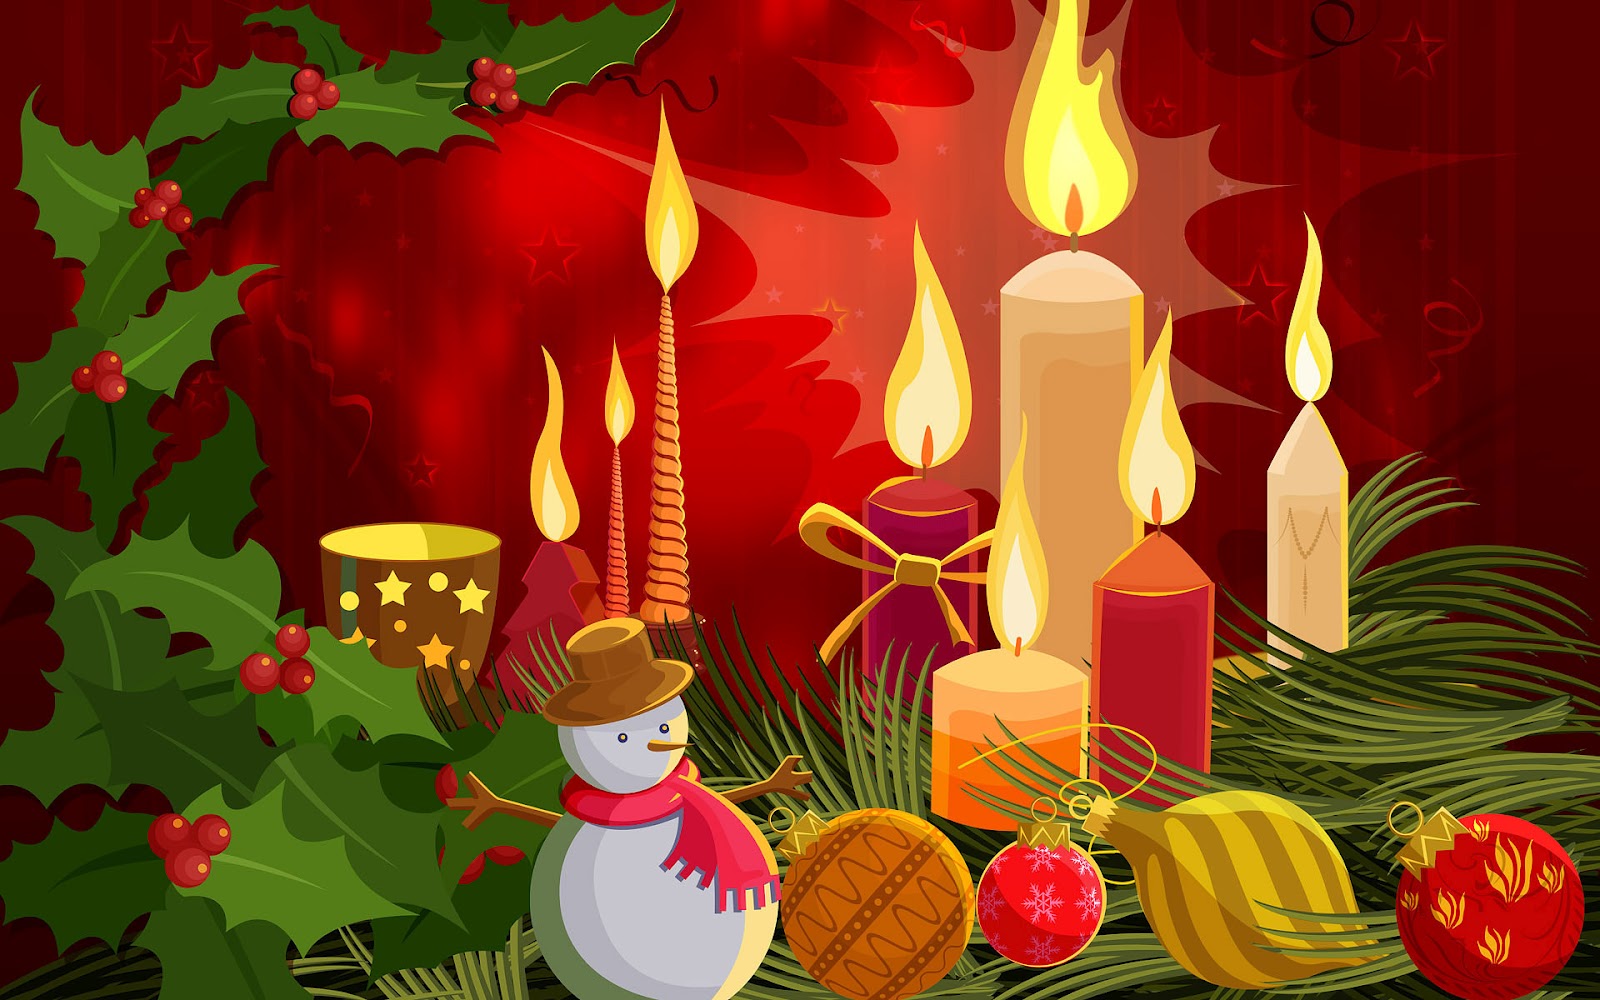 http://4.bp.blogspot.com/-bNkueJPBRxI/UBzciyuTnOI/AAAAAAAAEX8/tBoHOZRxaP0/s1600/hd-kerst-achtergrond-met-brandende-kaarsen-en-kerst-spullen-hd-kerstmis-wallpaper.jpg